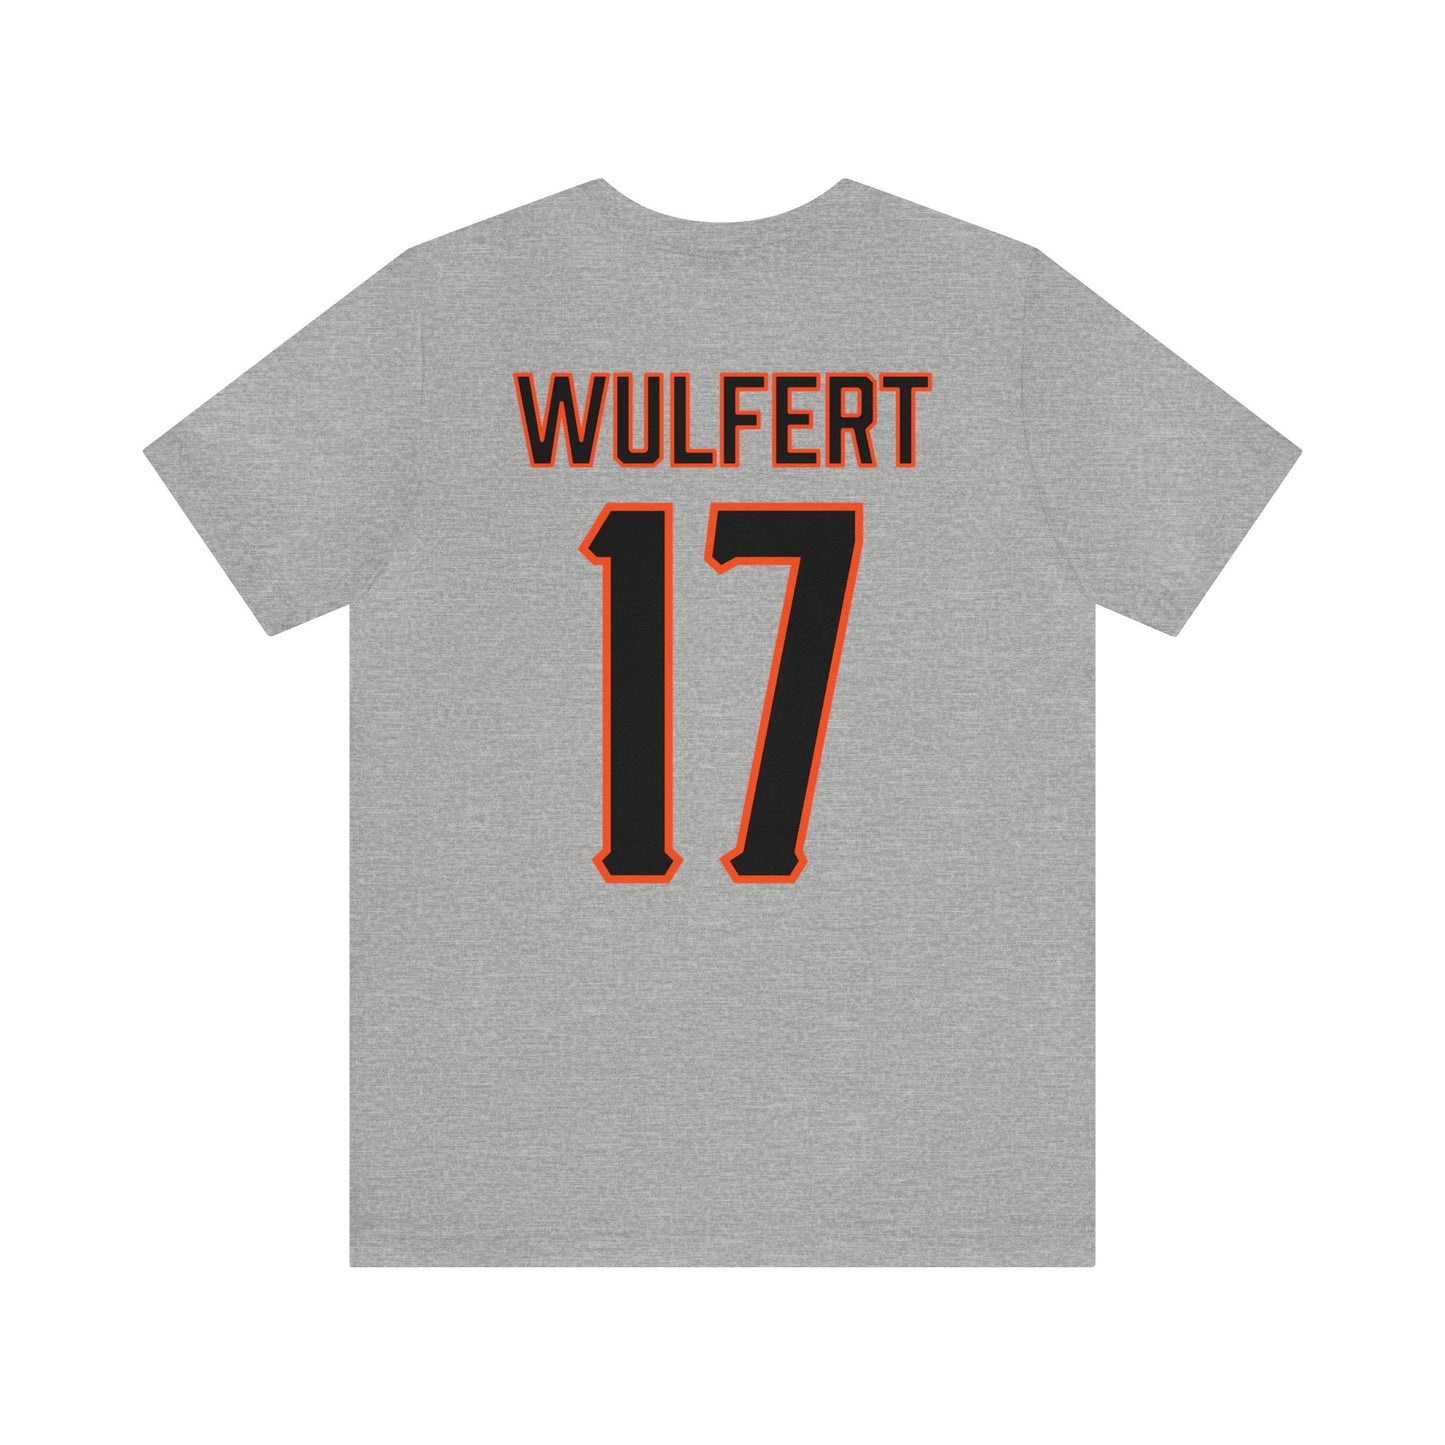 Tyler Wulfert #17 Swinging Pete T-Shirt